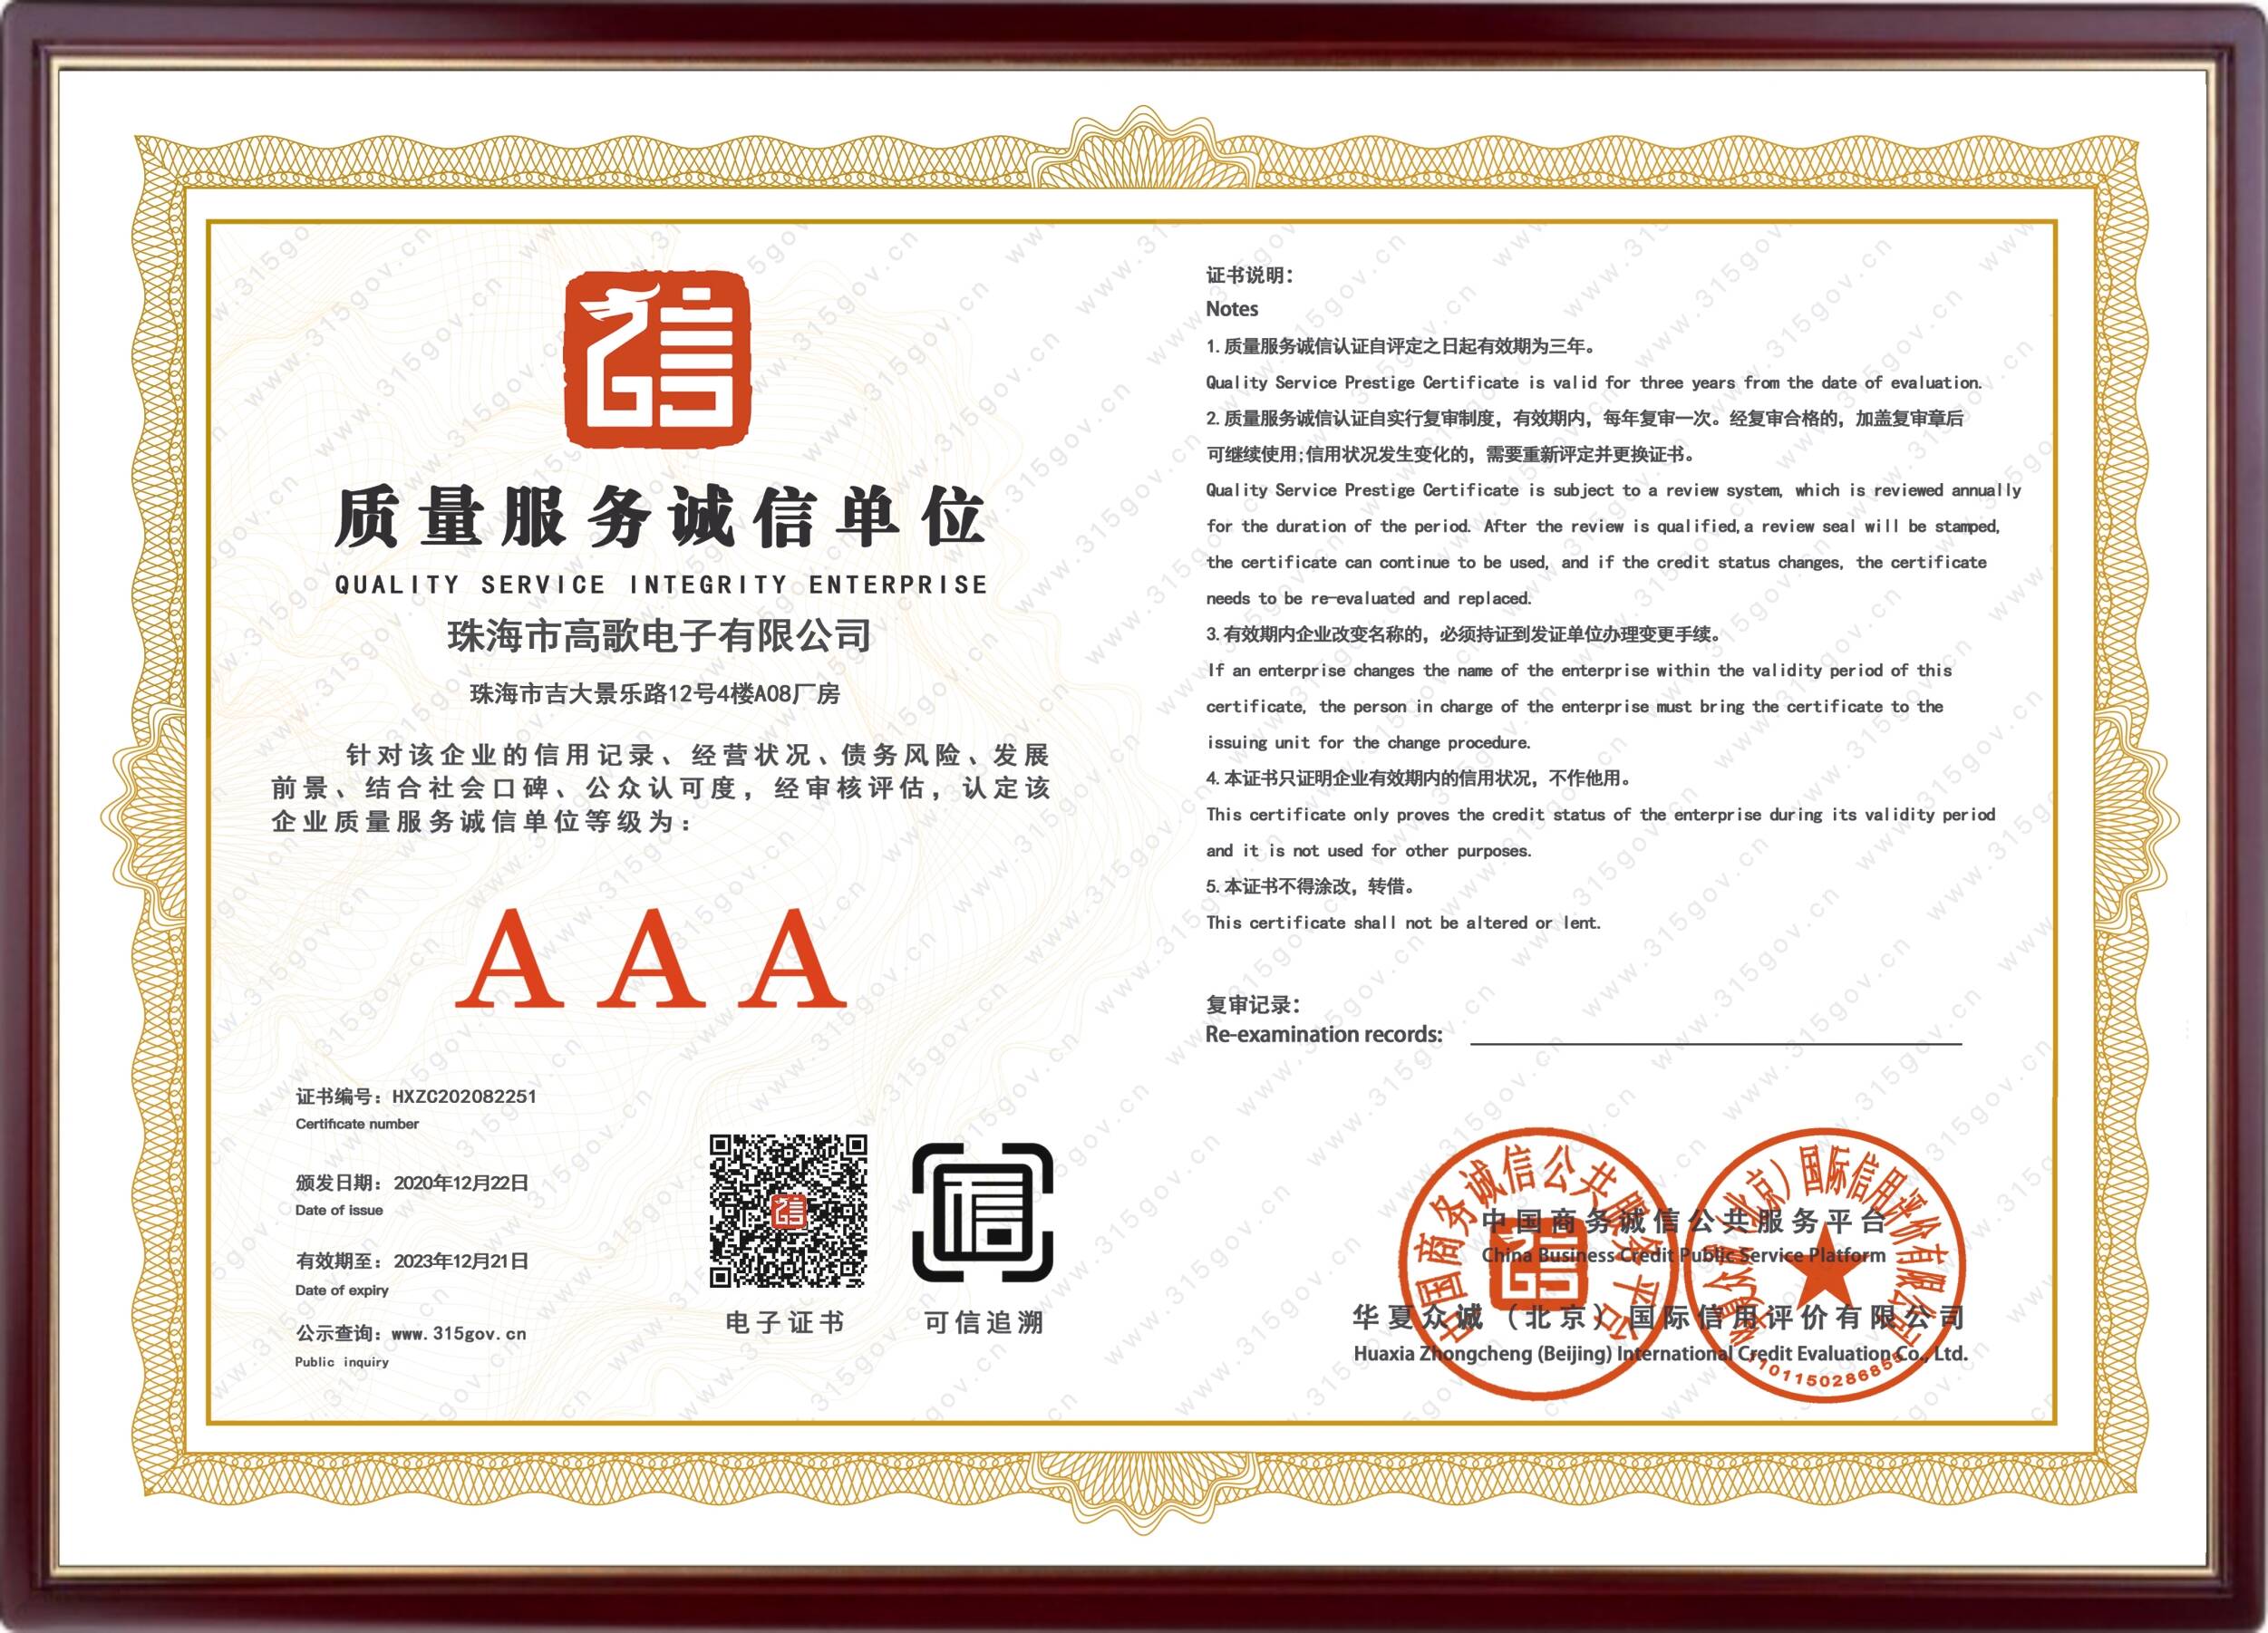 Credit certificate